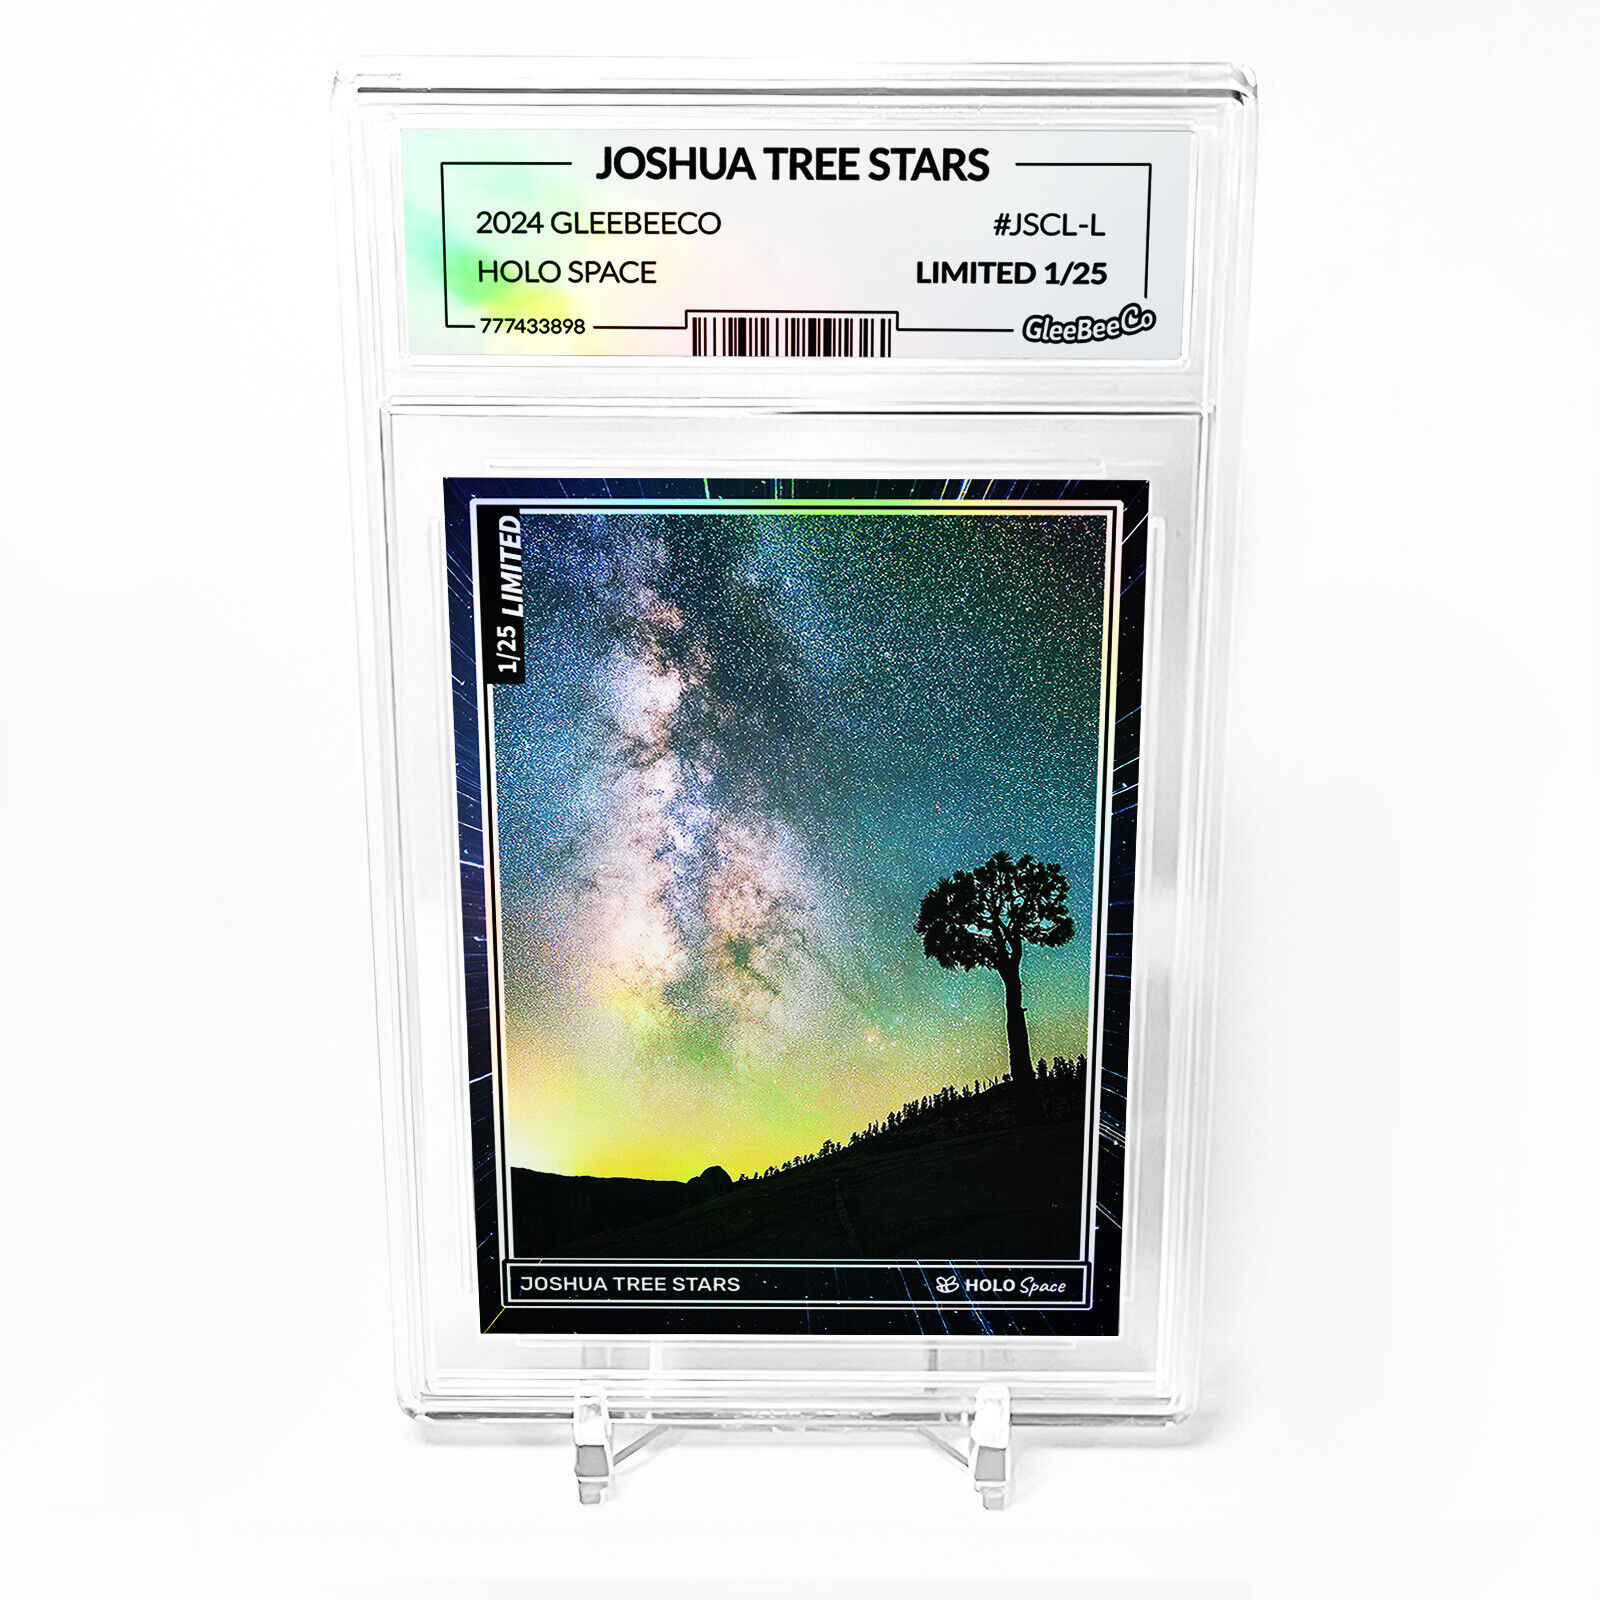 JOSHUA TREE STARS Photo Card 2024 GleeBeeCo Holo Space #JSCL-L /25 Made